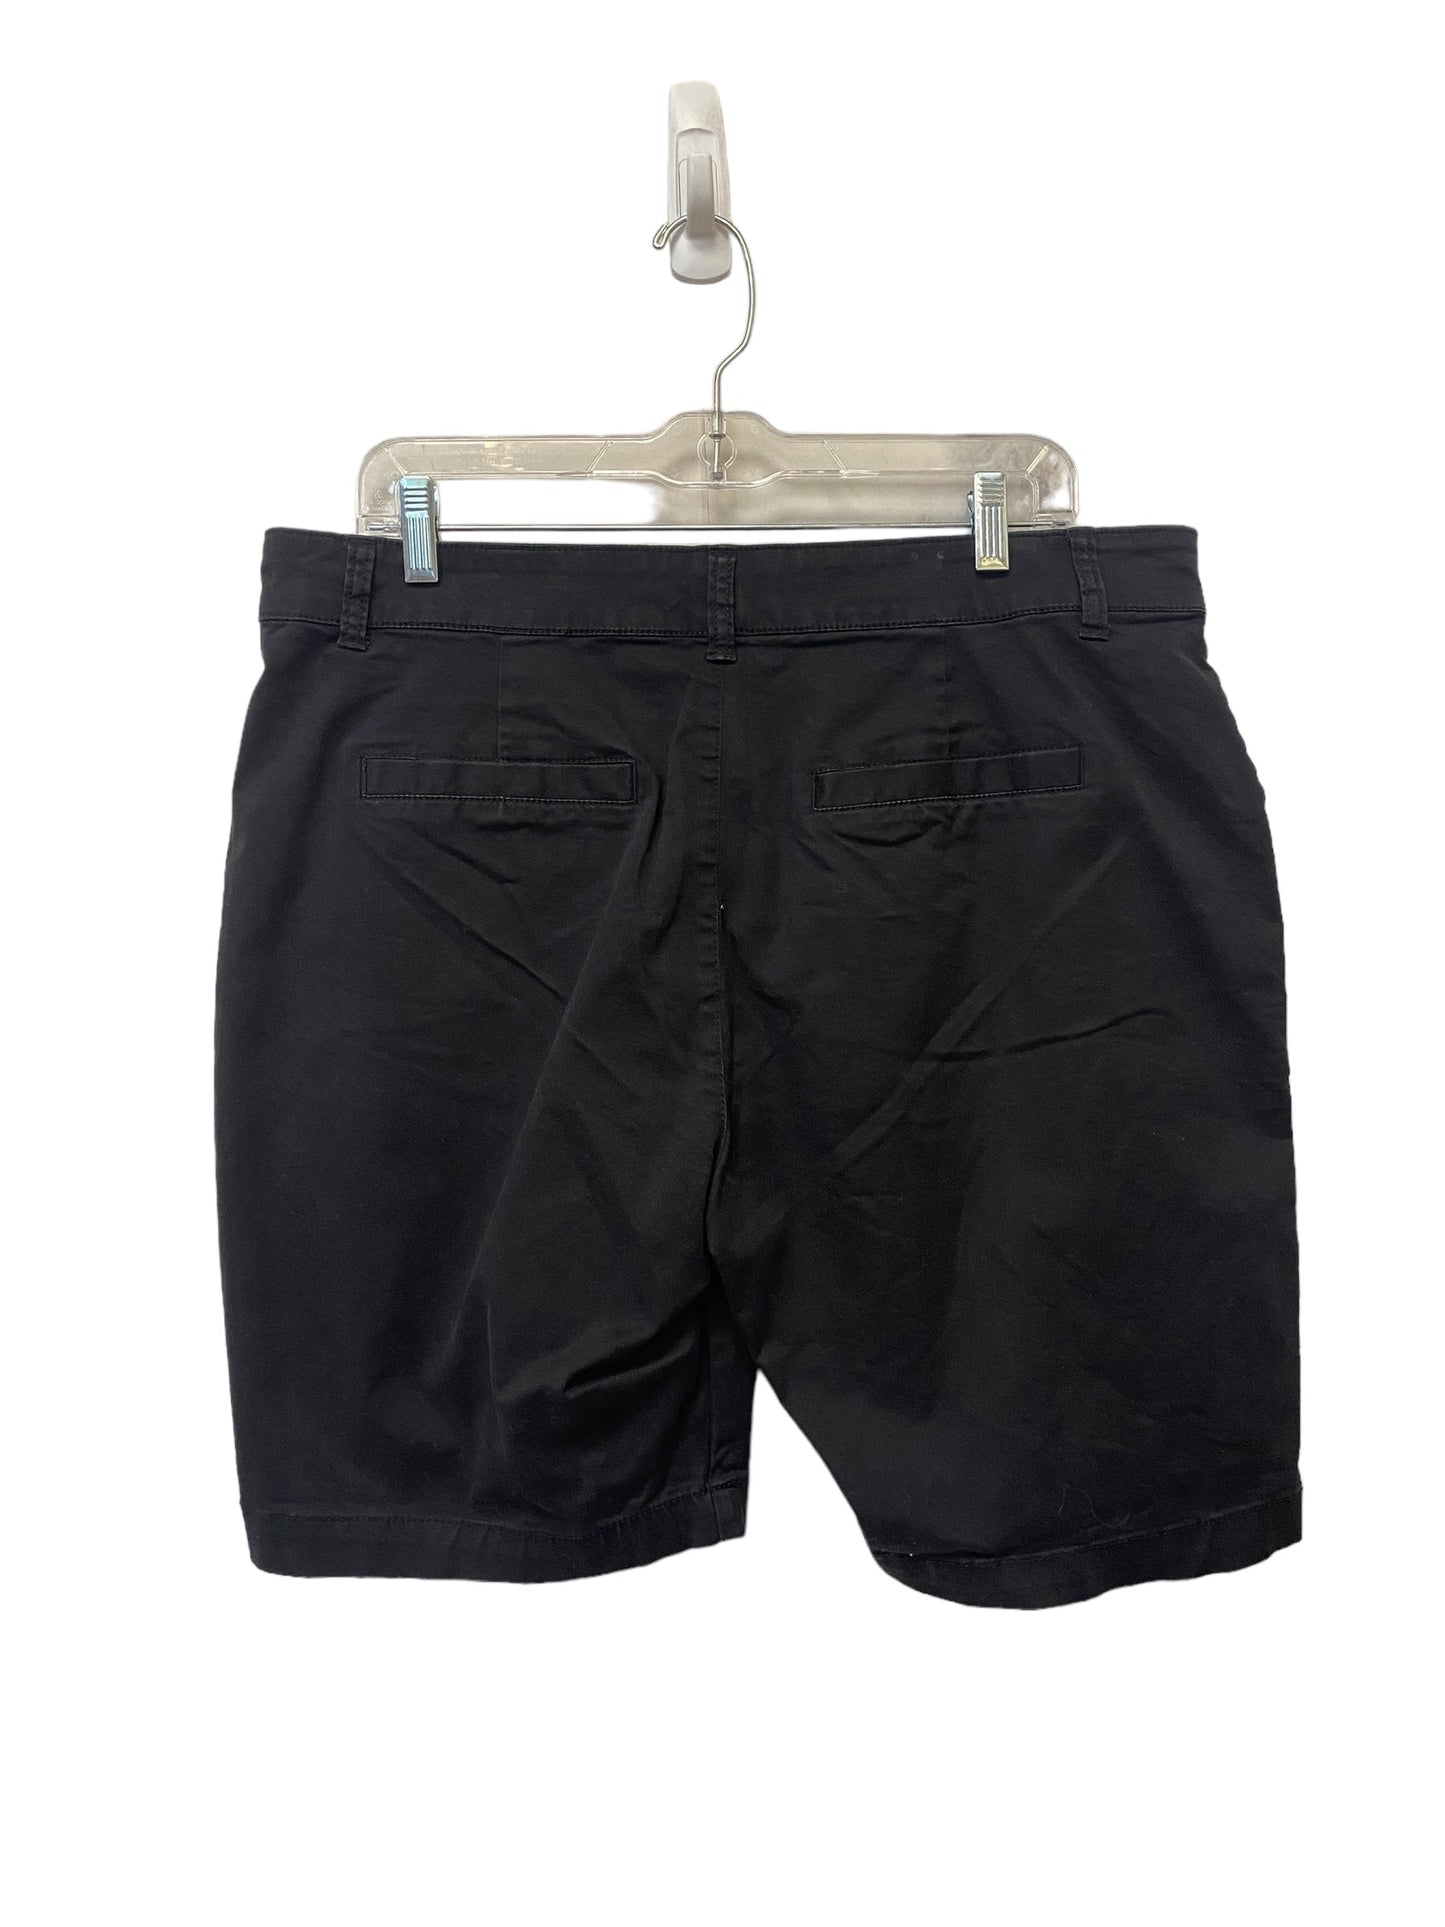 Black Shorts Gap, Size 14